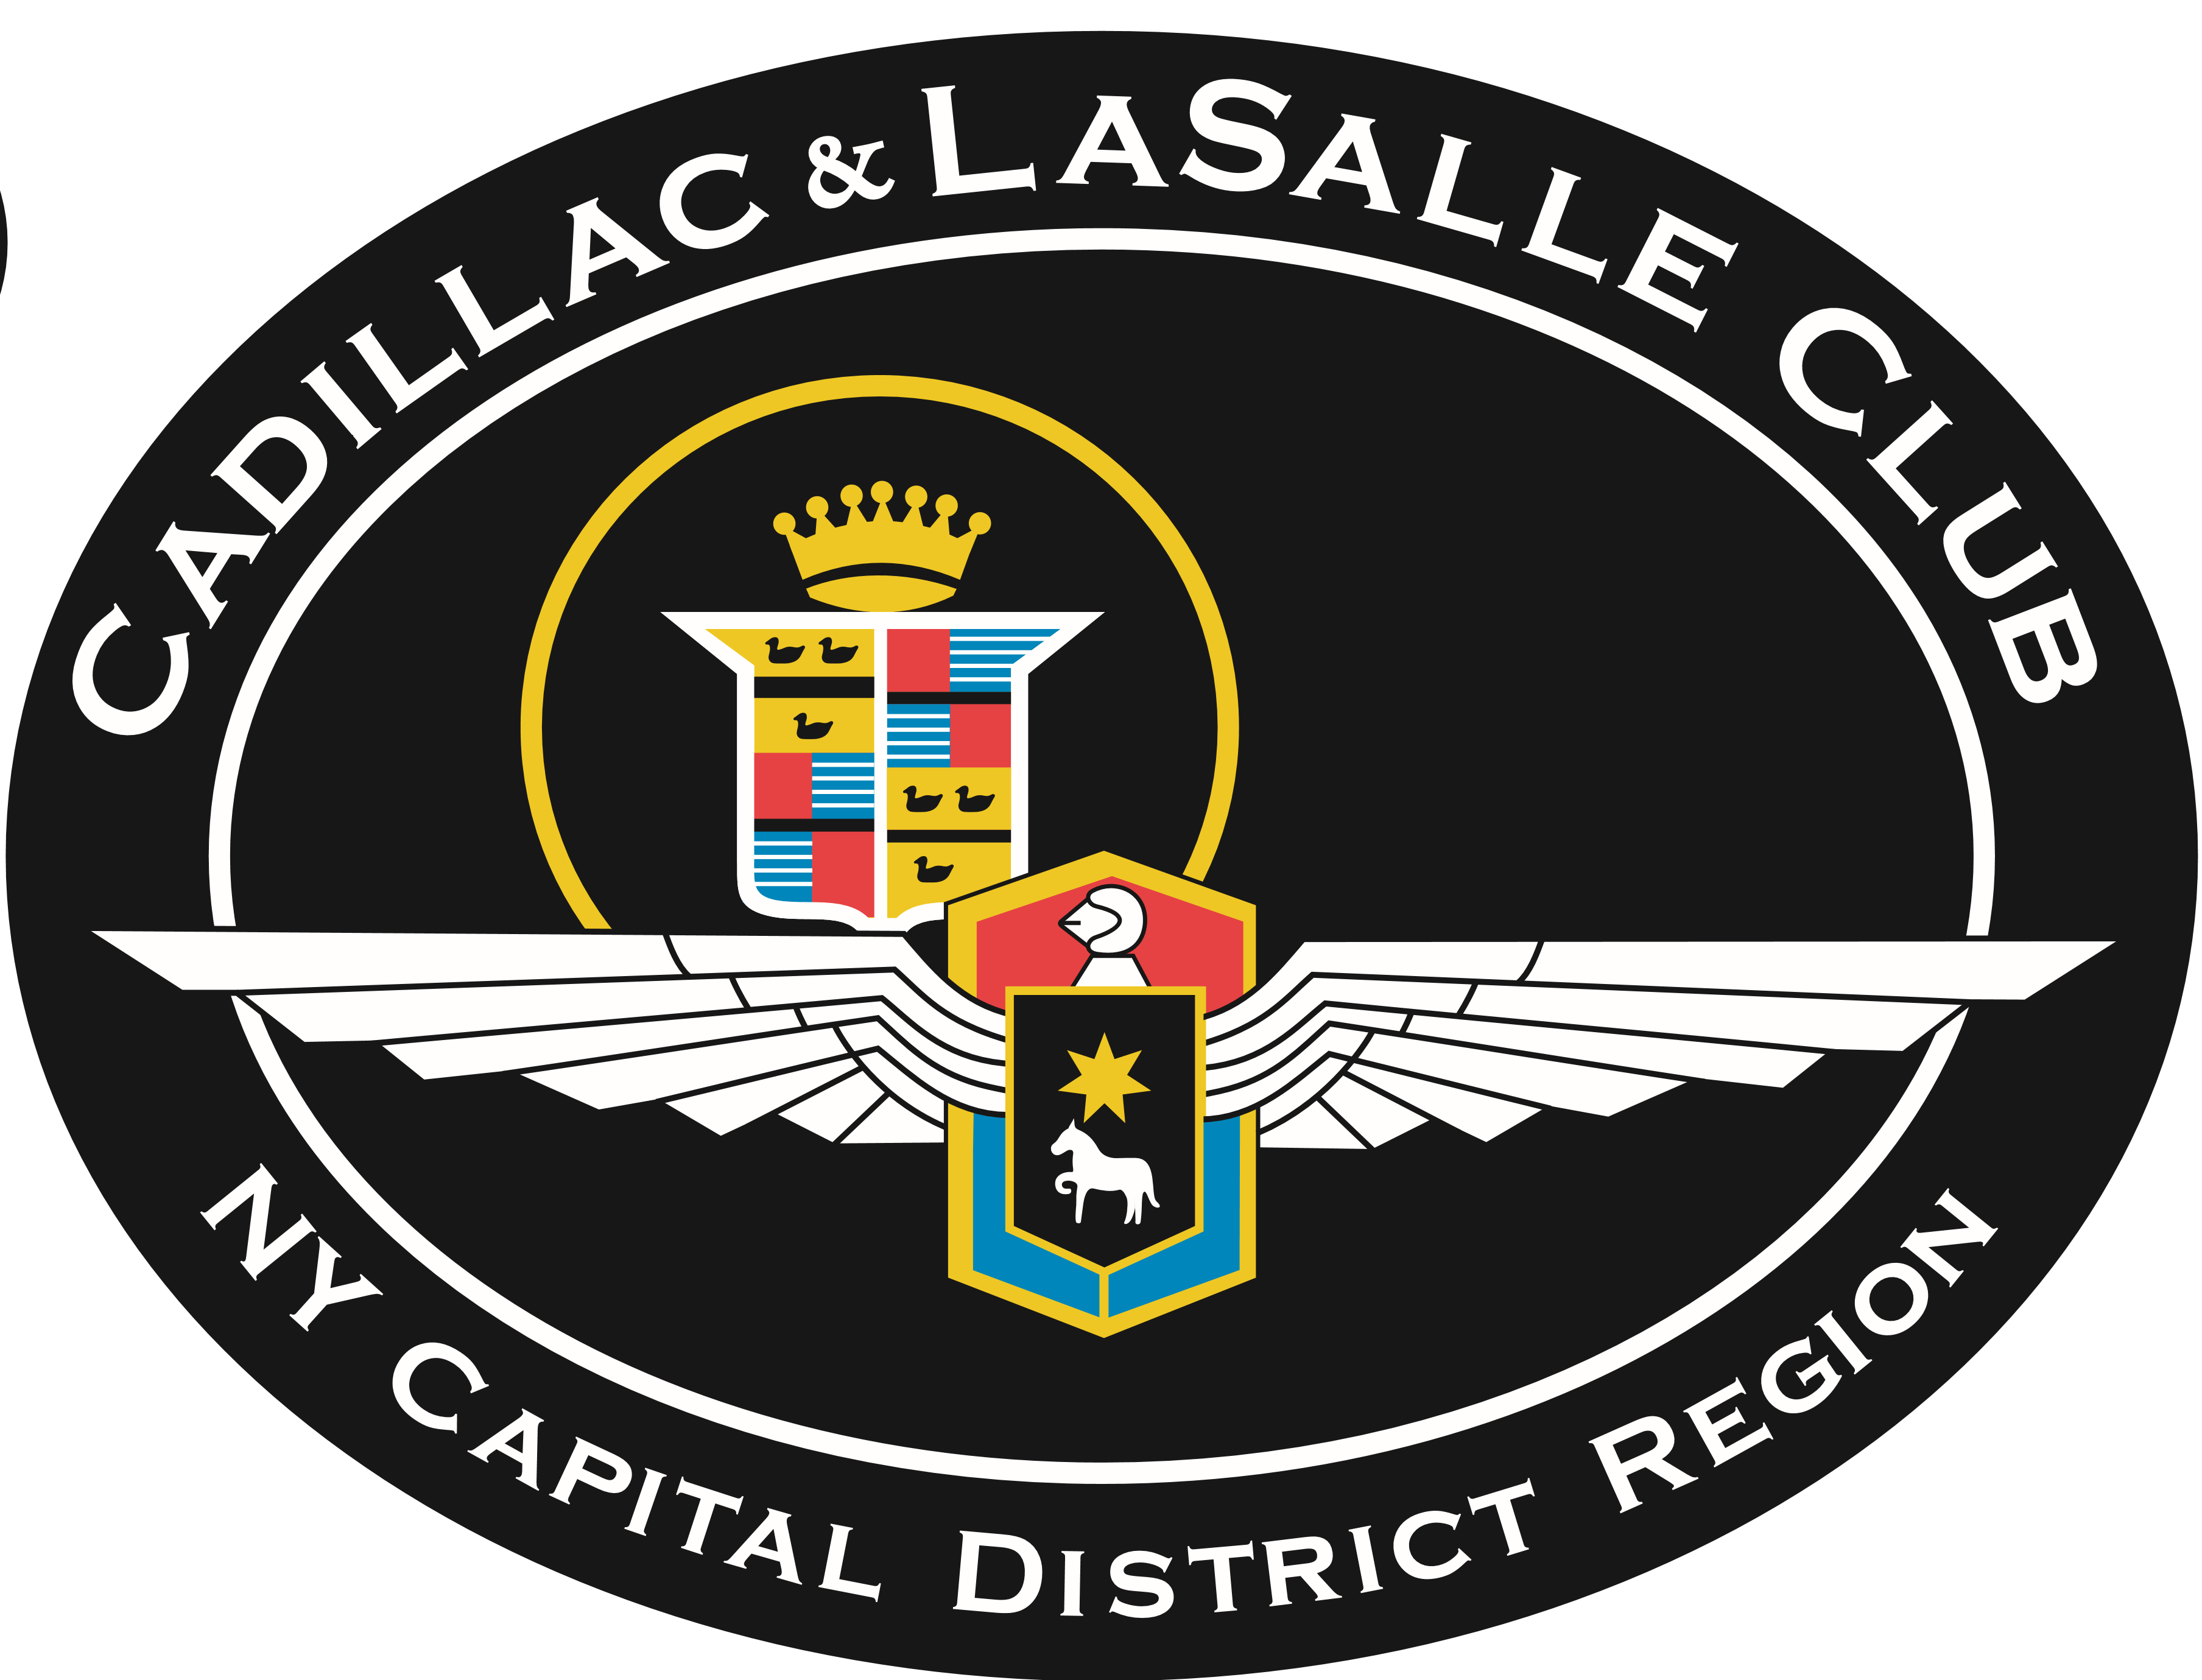 Cadillac LaSalle Club Logo - Cadillac & LaSalle Club (CLC) Grand National Meet 2014. July 8th